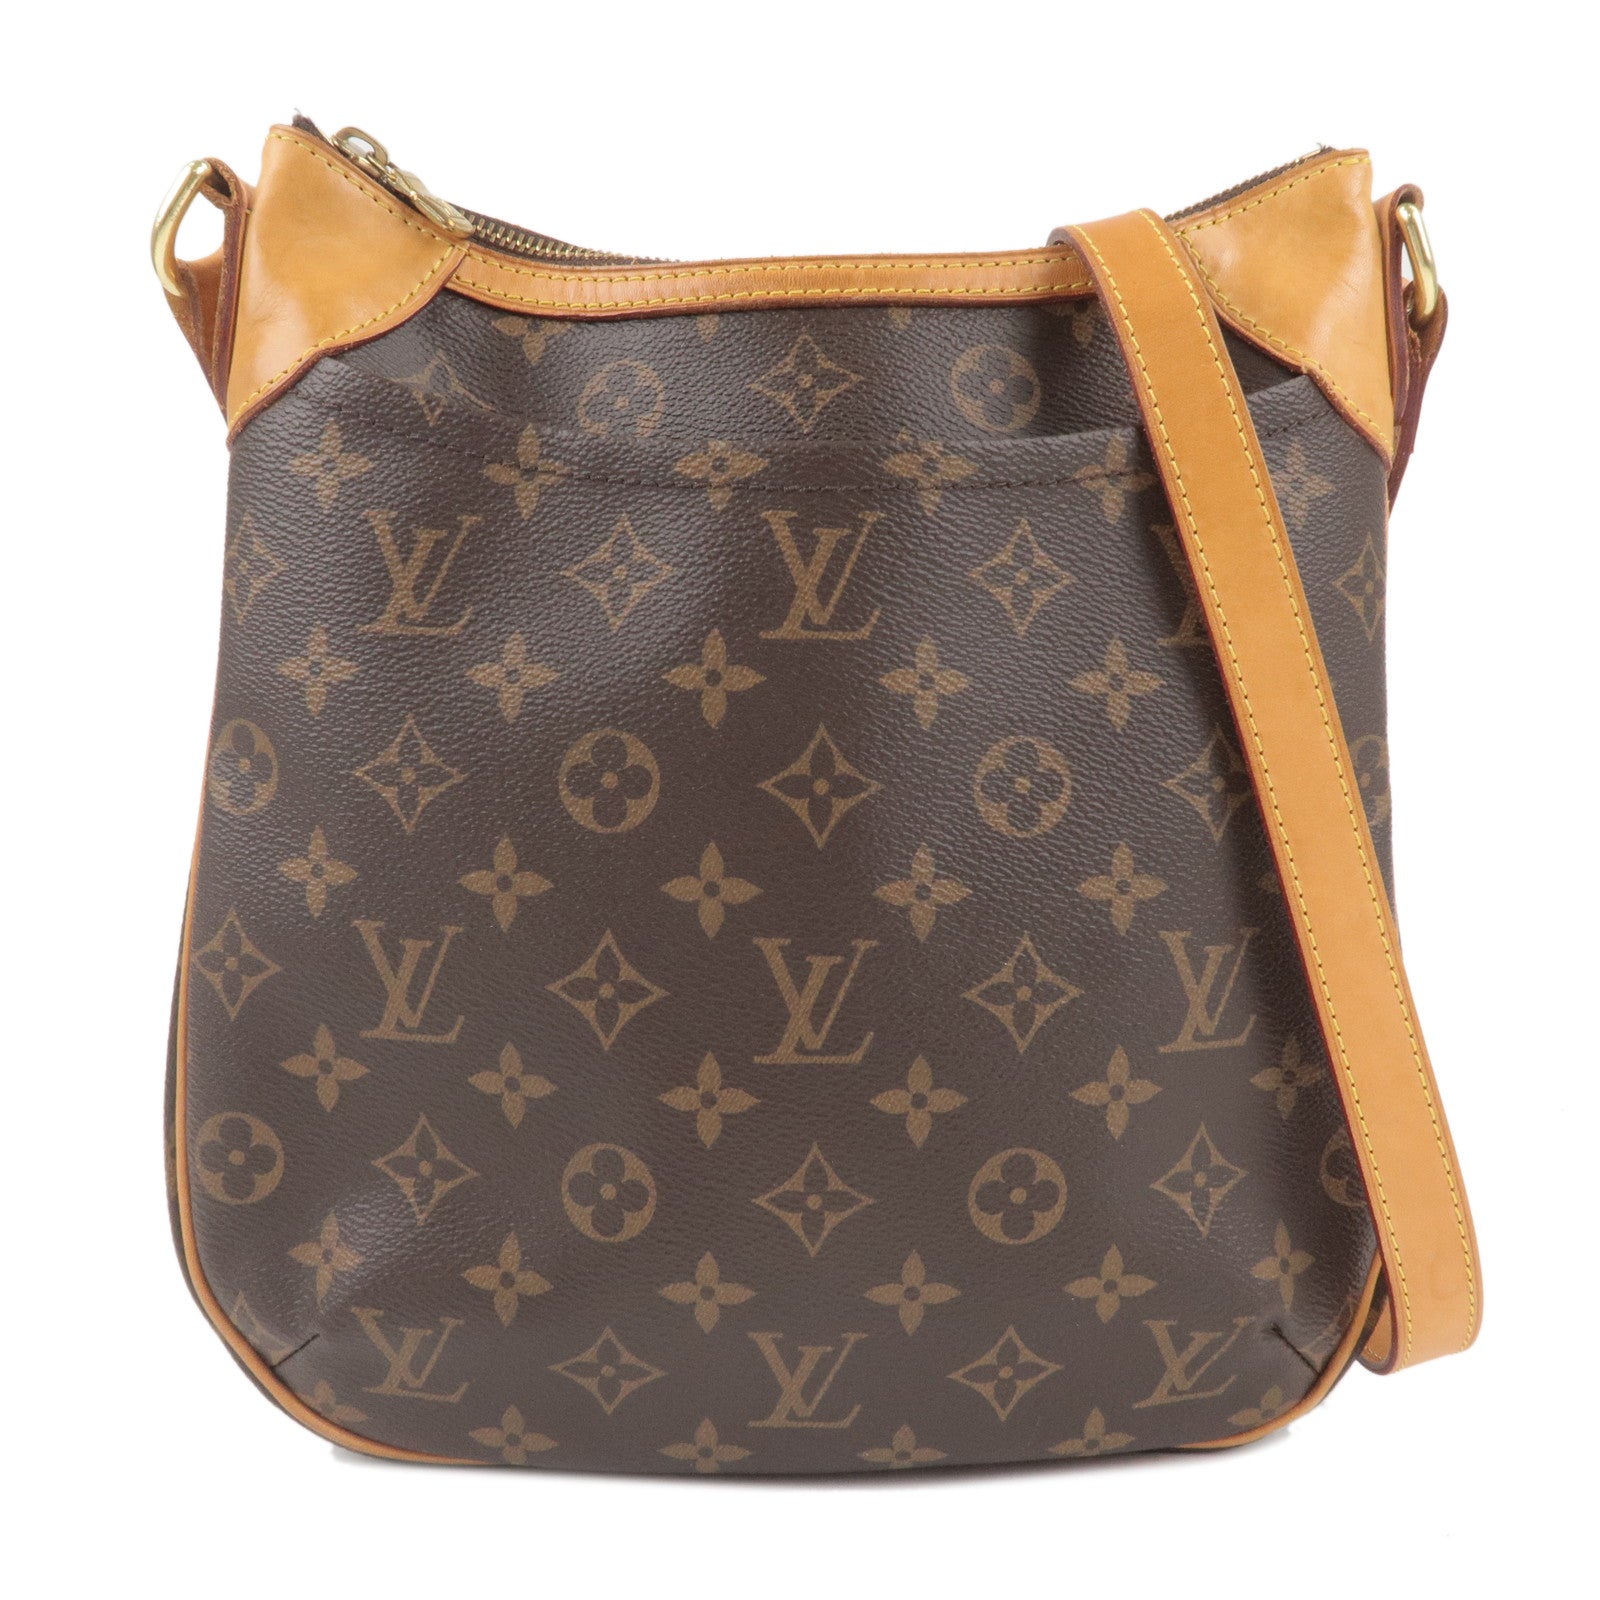 PM - Louis - ep_vintage luxury Store - Vuitton - louis vuitton